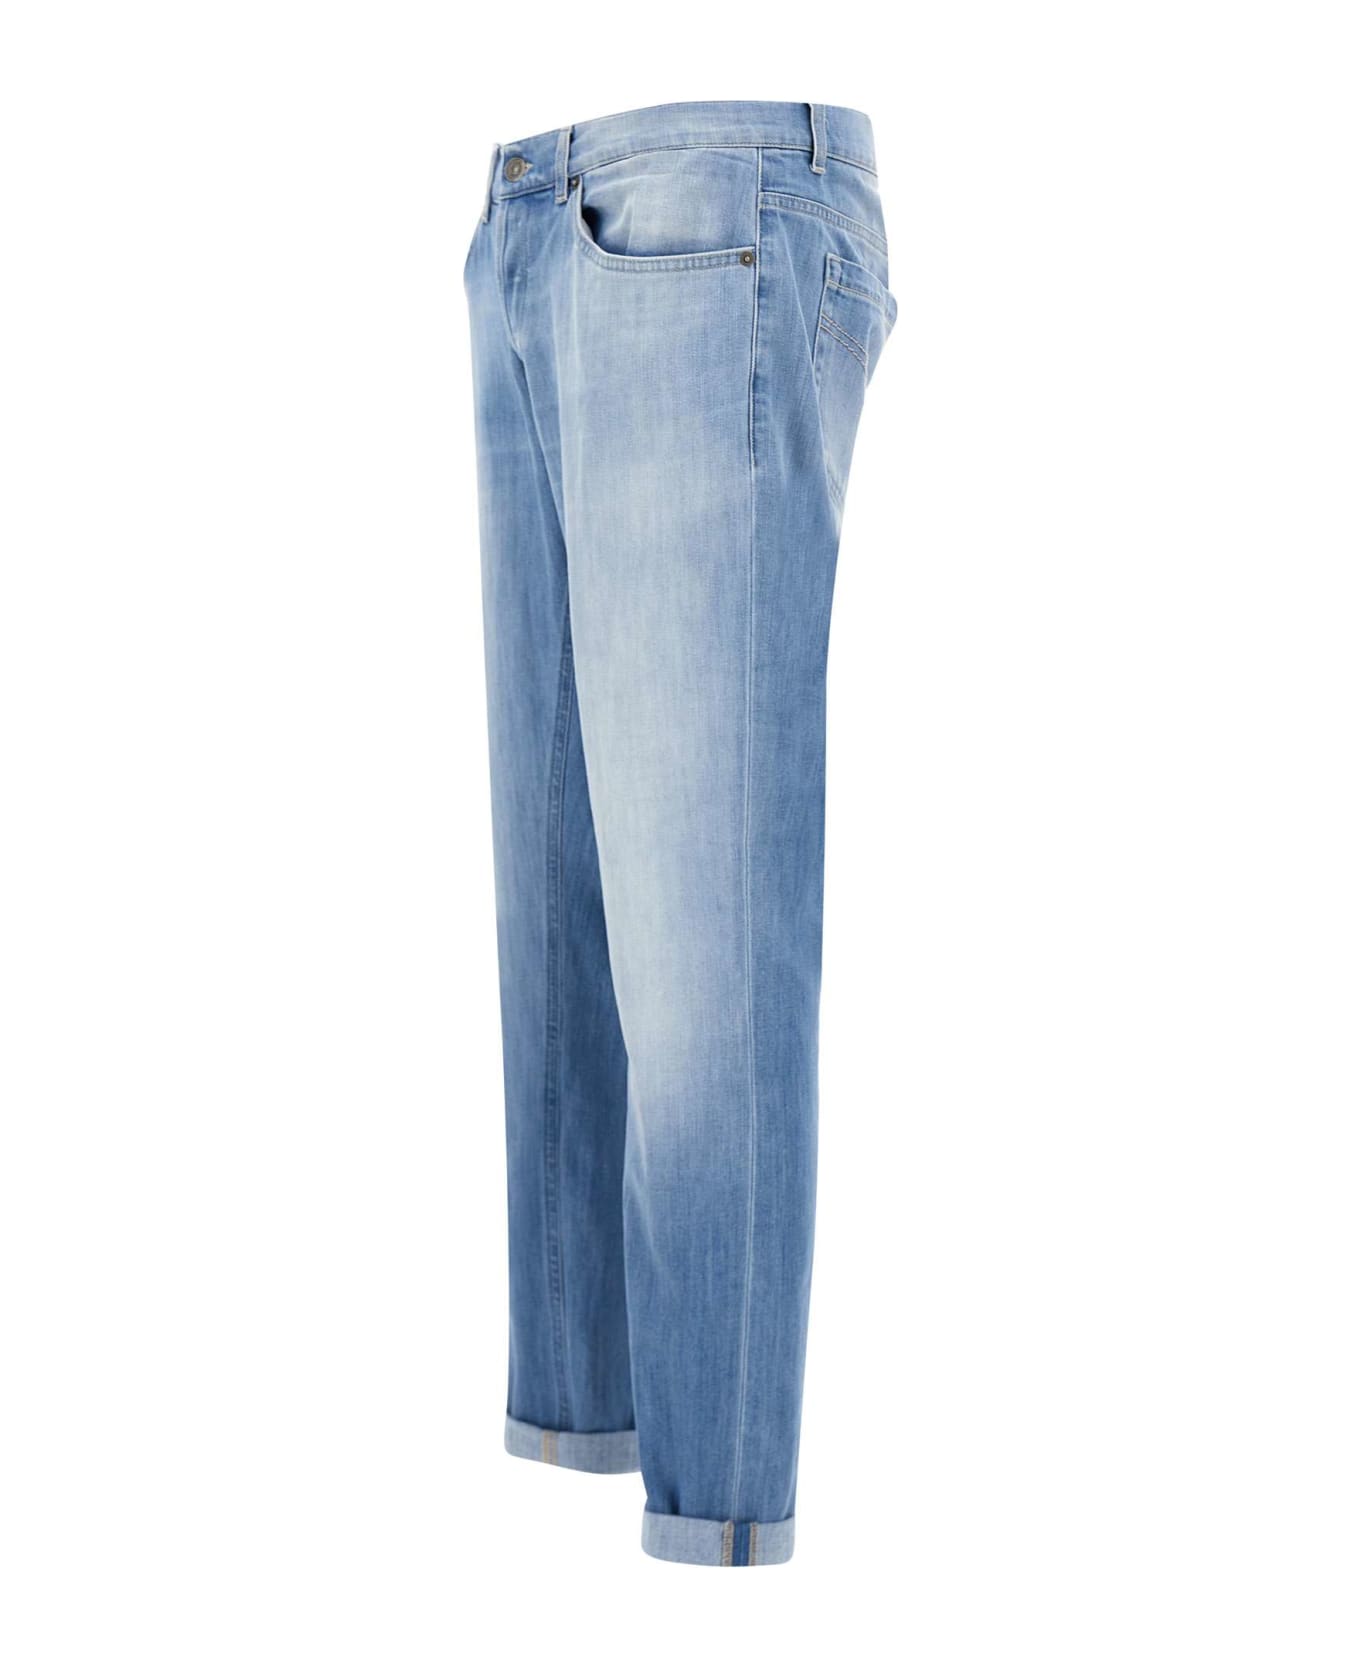 Dondup "george" Jeans - LIGHT BLUE